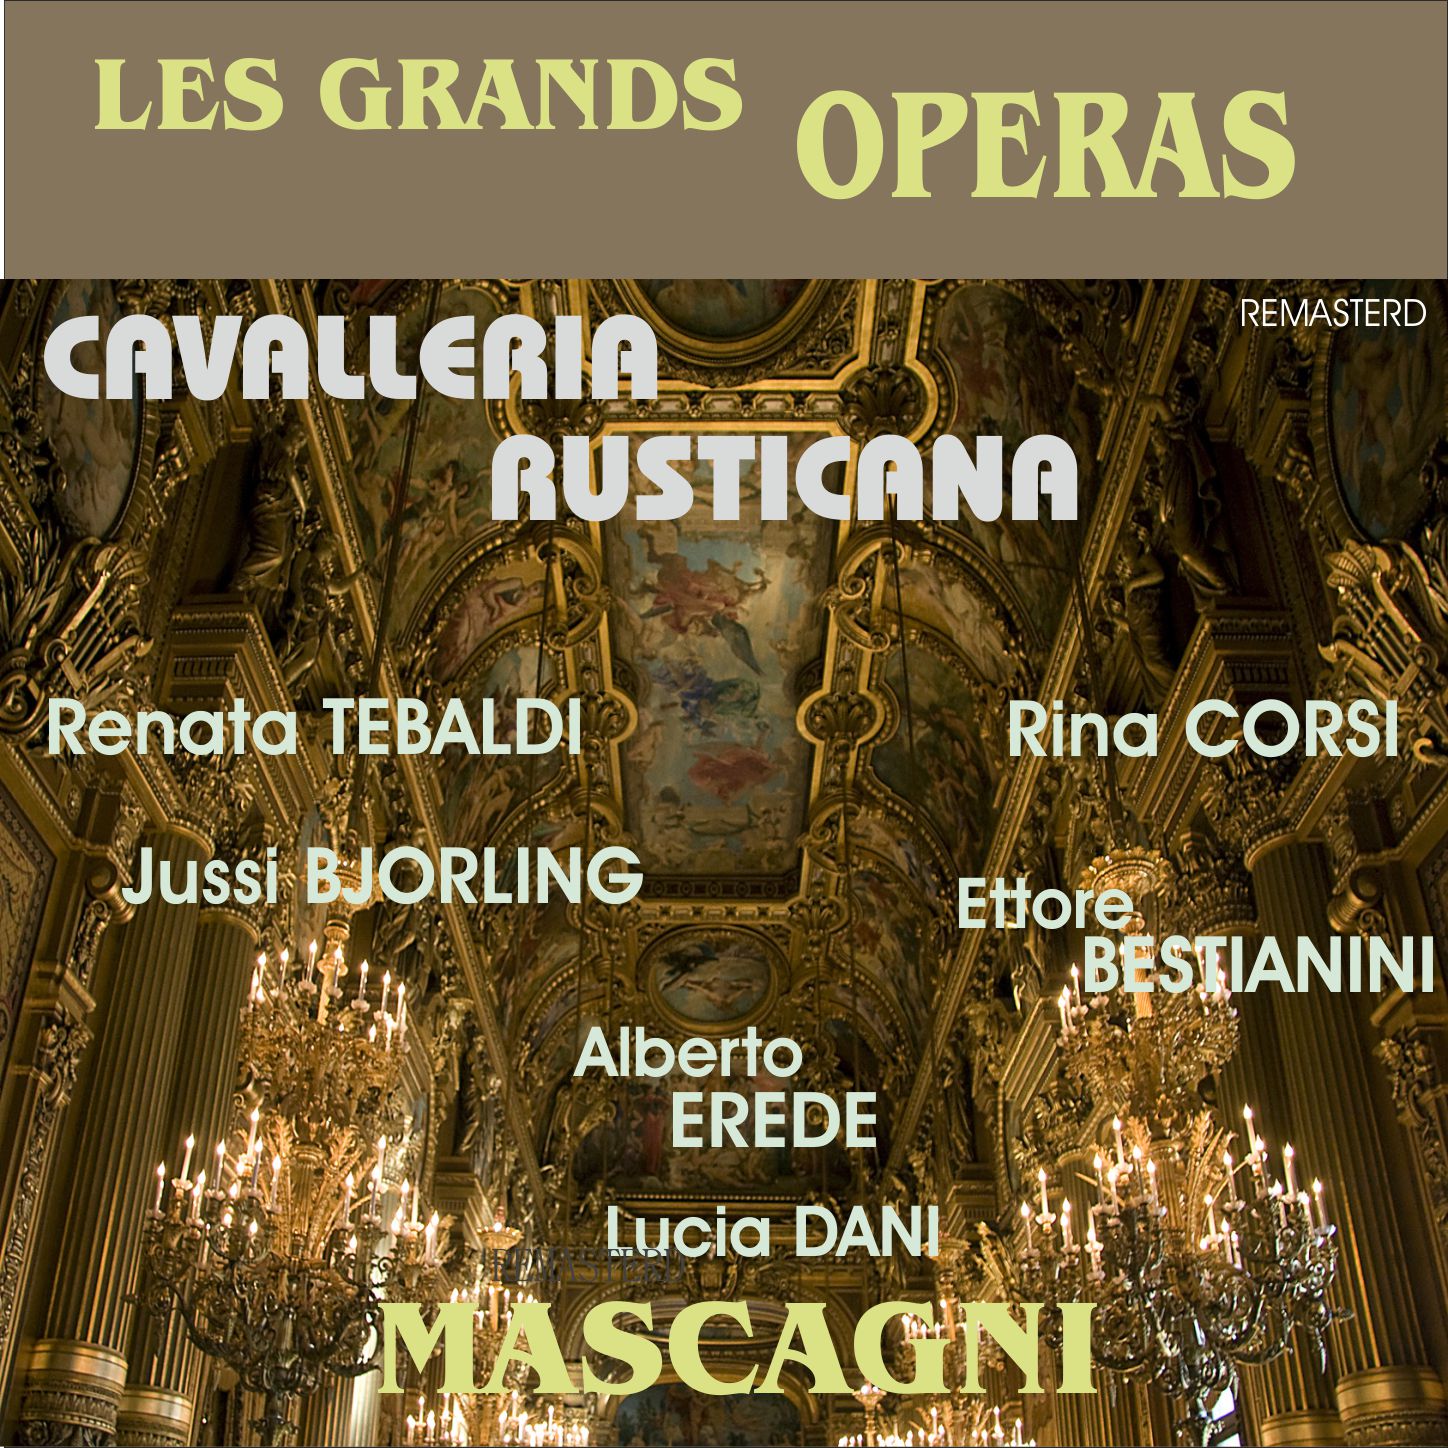 Cavallerie Rusticana  Ope ra version Tebaldi